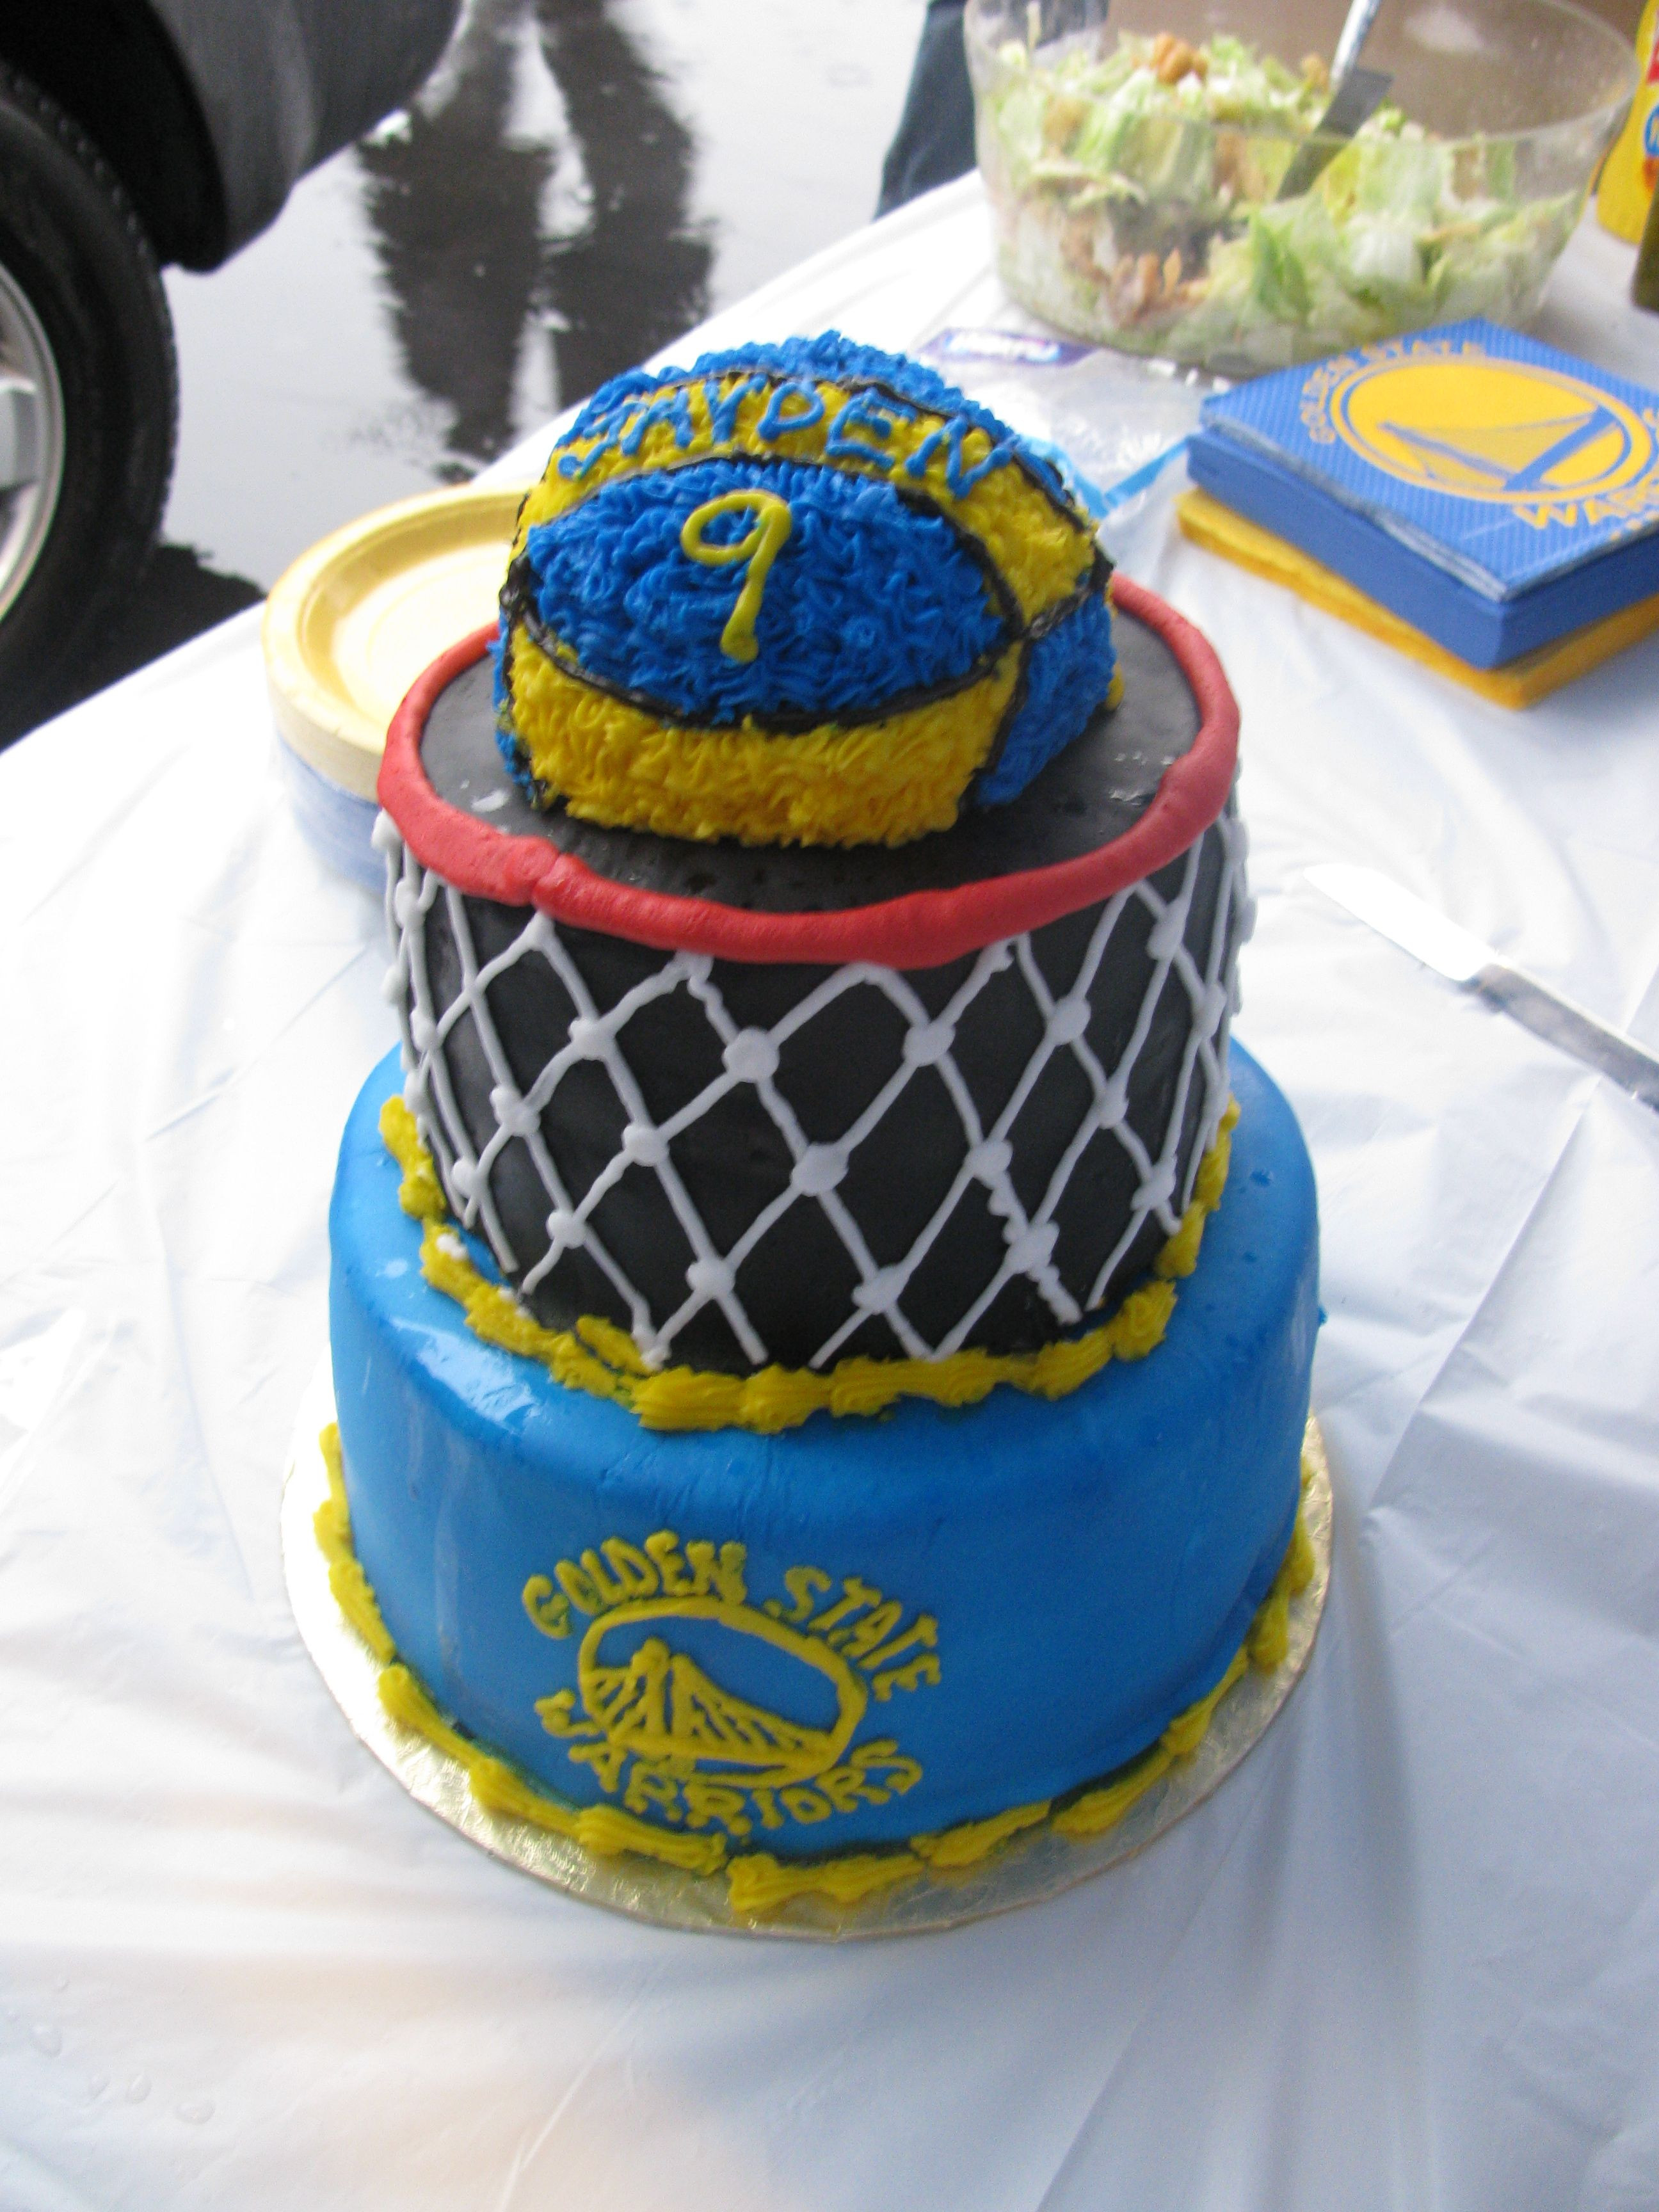 Best ideas about Golden State Warriors Birthday Cake
. Save or Pin Golden State Warriors Cake Fanatics Pinterest Now.